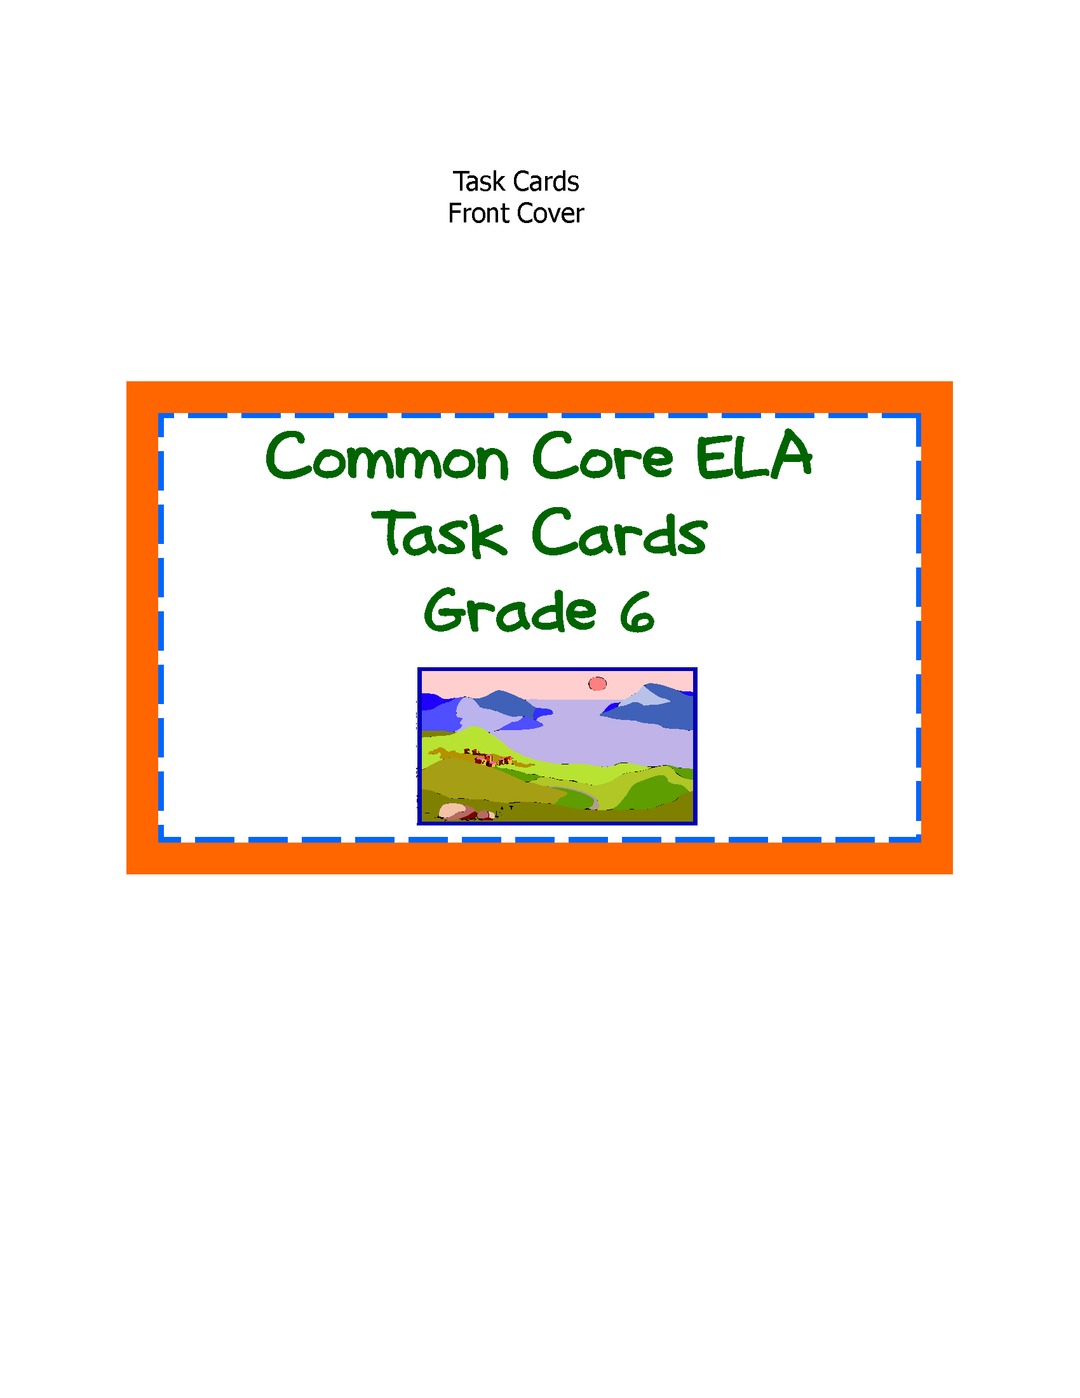 Common Core ELA Task Cards: Grade 6